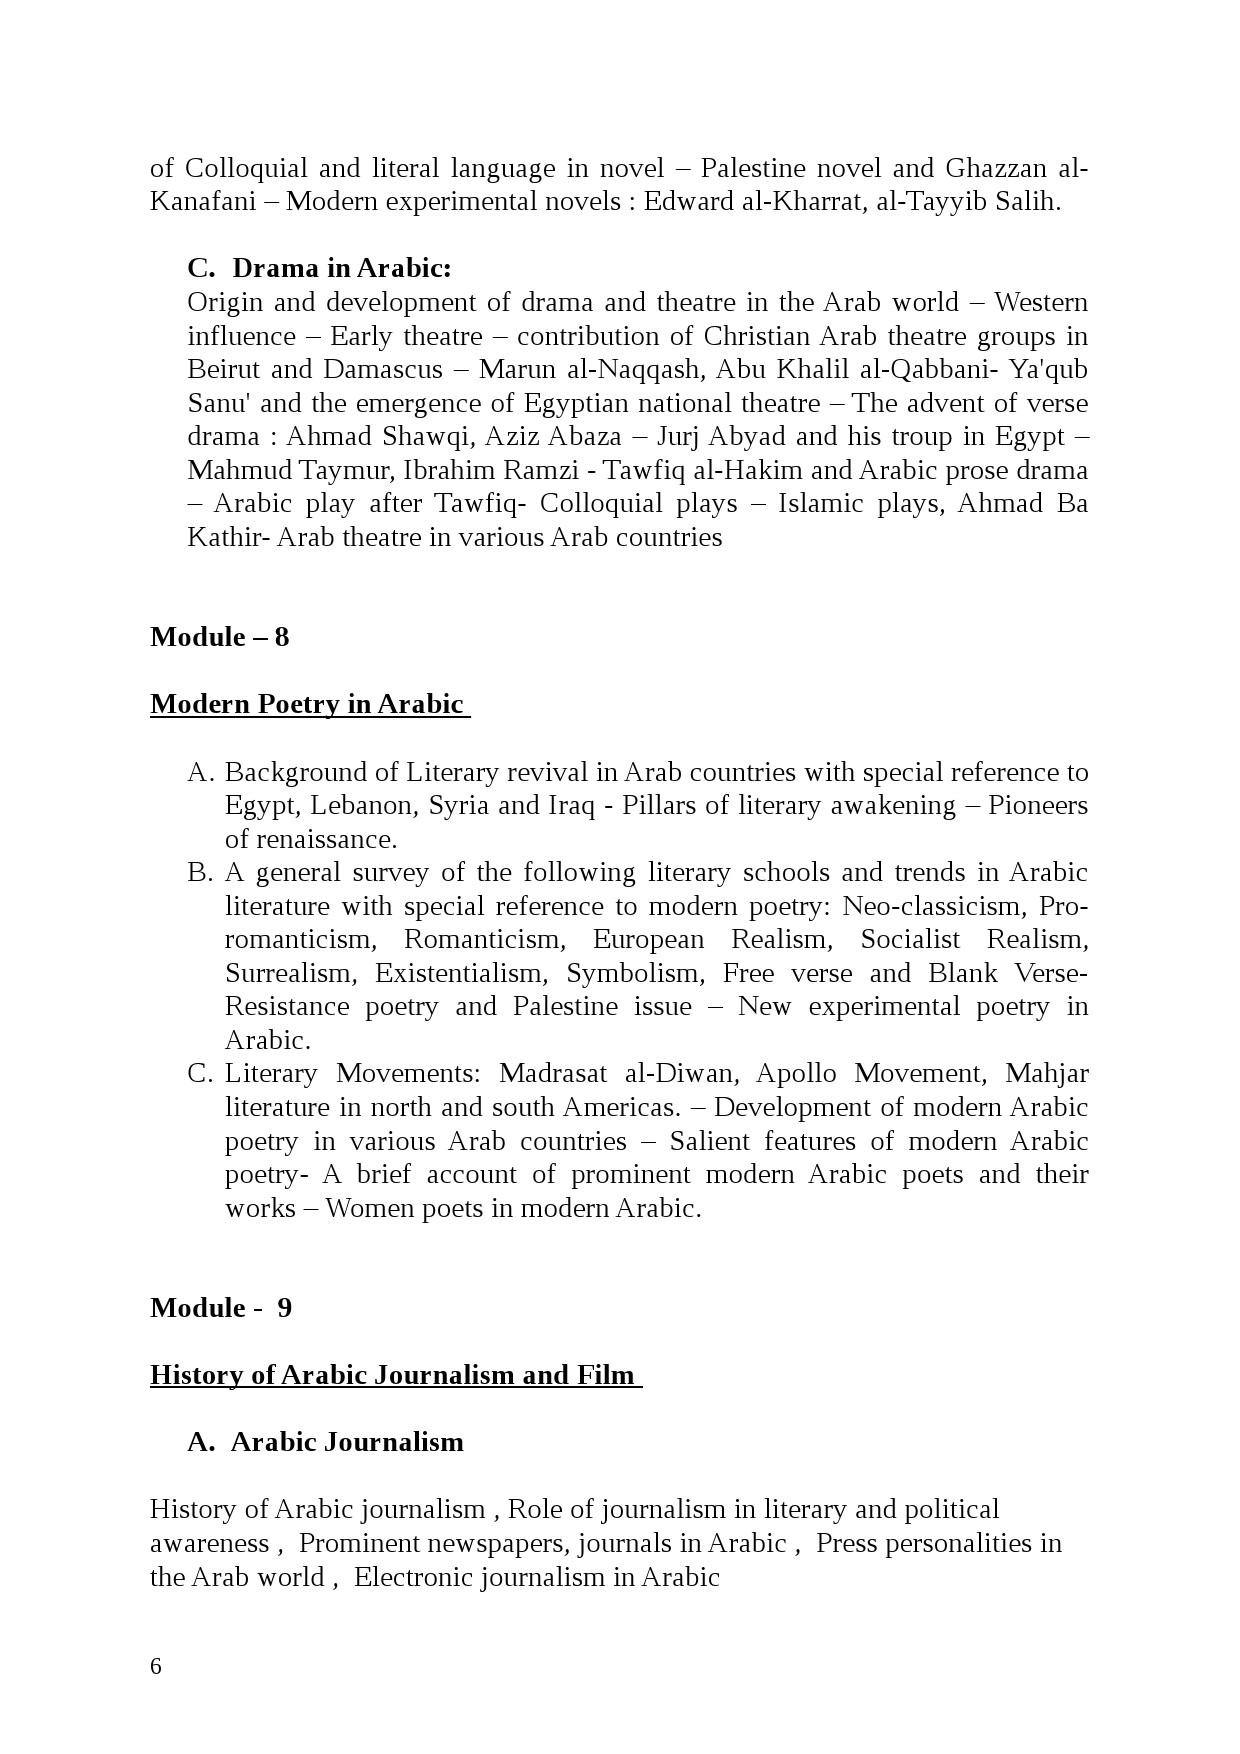 Kerala PSC Assistant Professor Arabic Exam Revised Syllabus - Notification Image 6